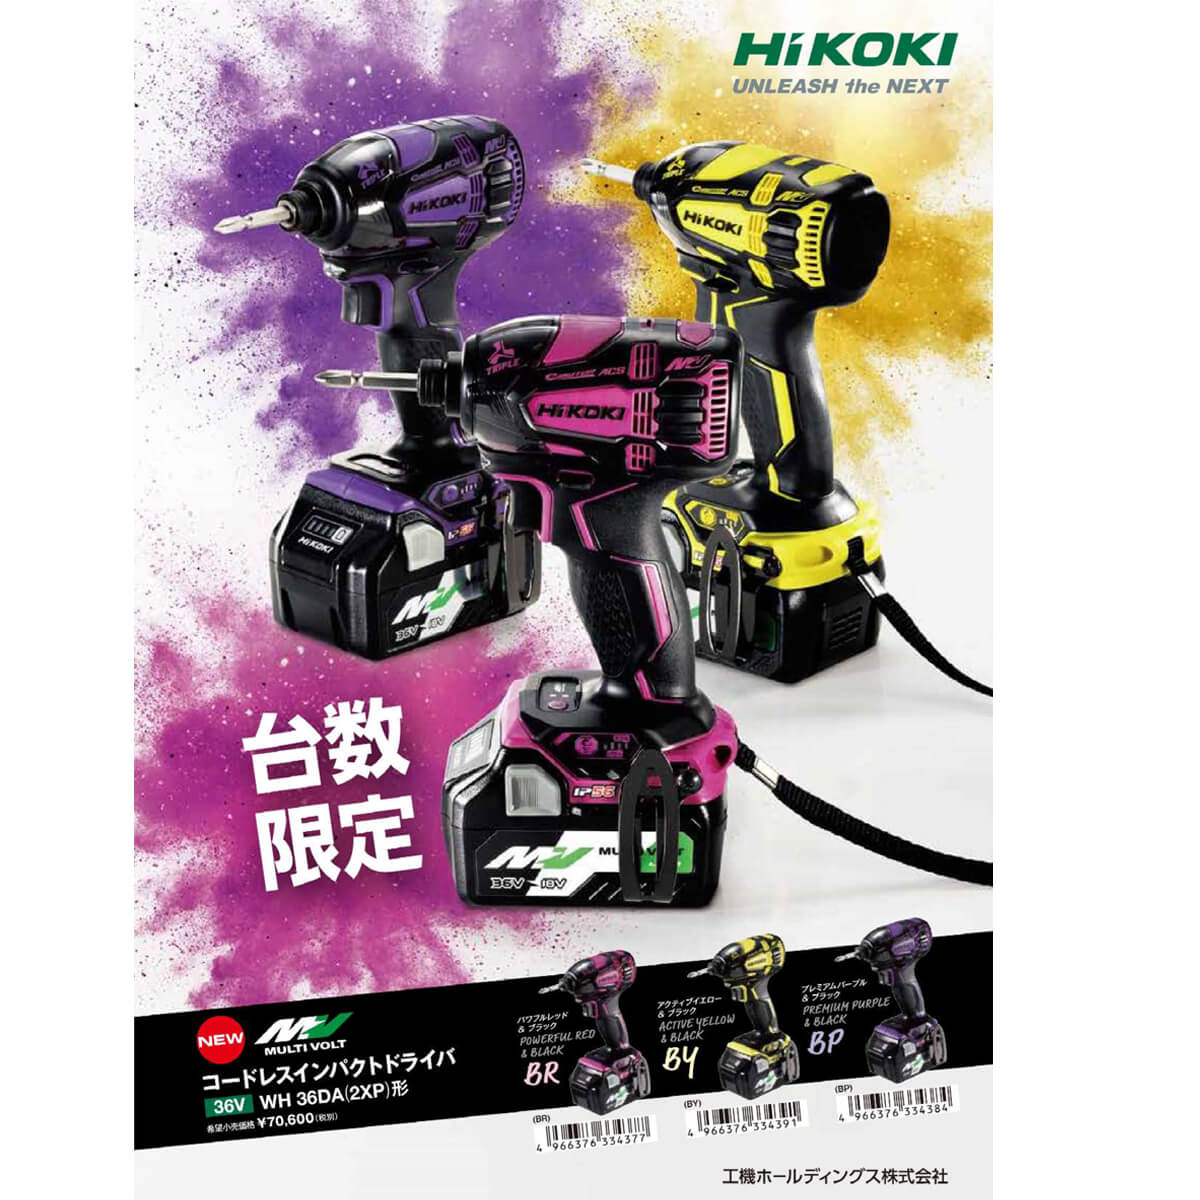 HiKOKI 限定色 36Vインパクトドライバー WH36DA 2XP(BG)-